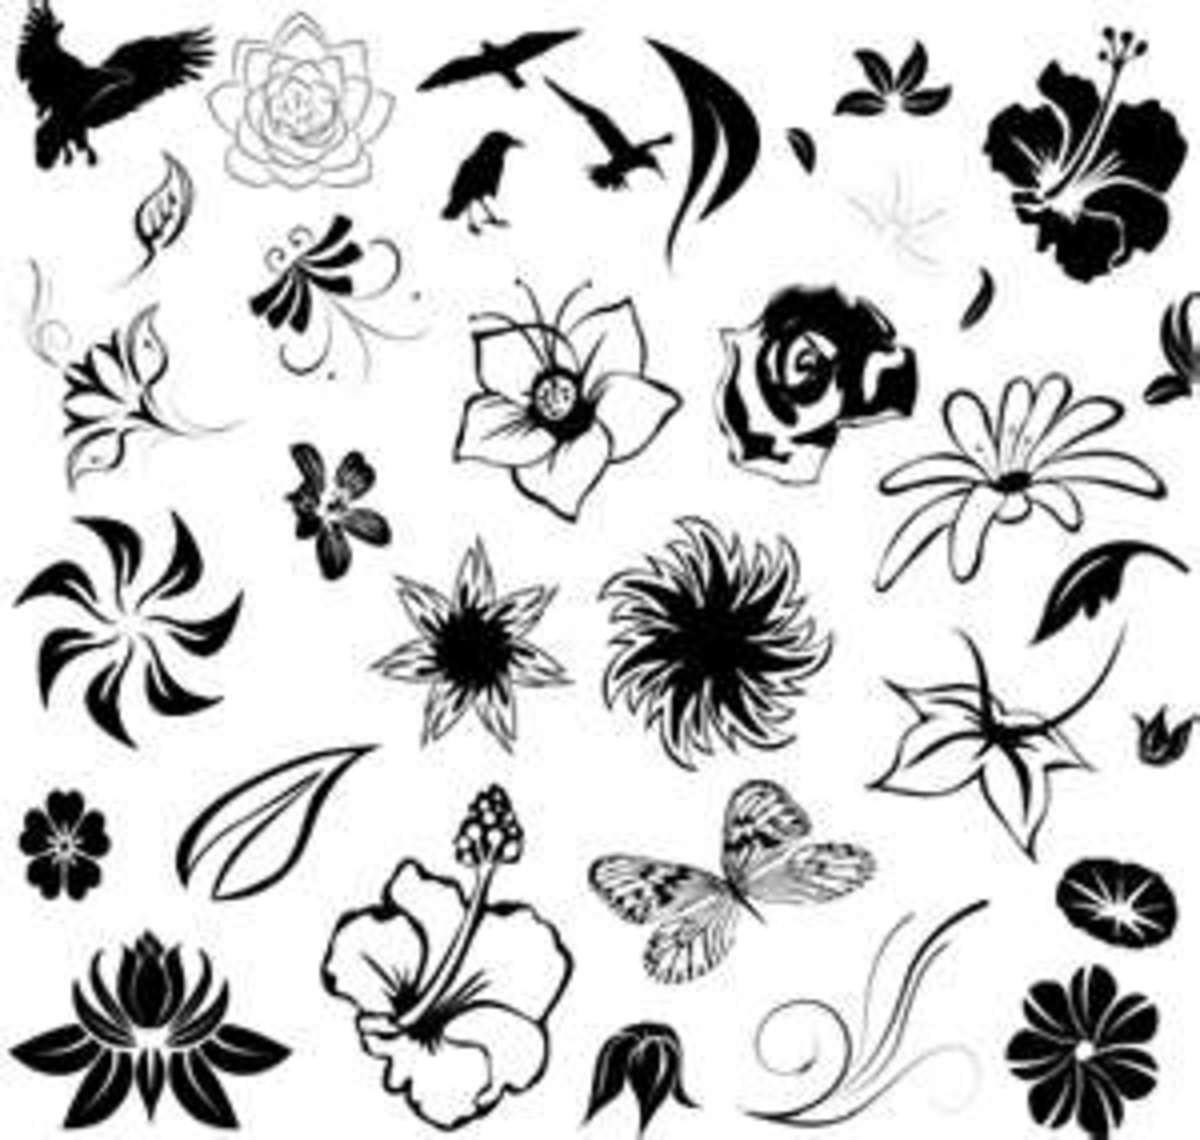 small-flower-tattoos